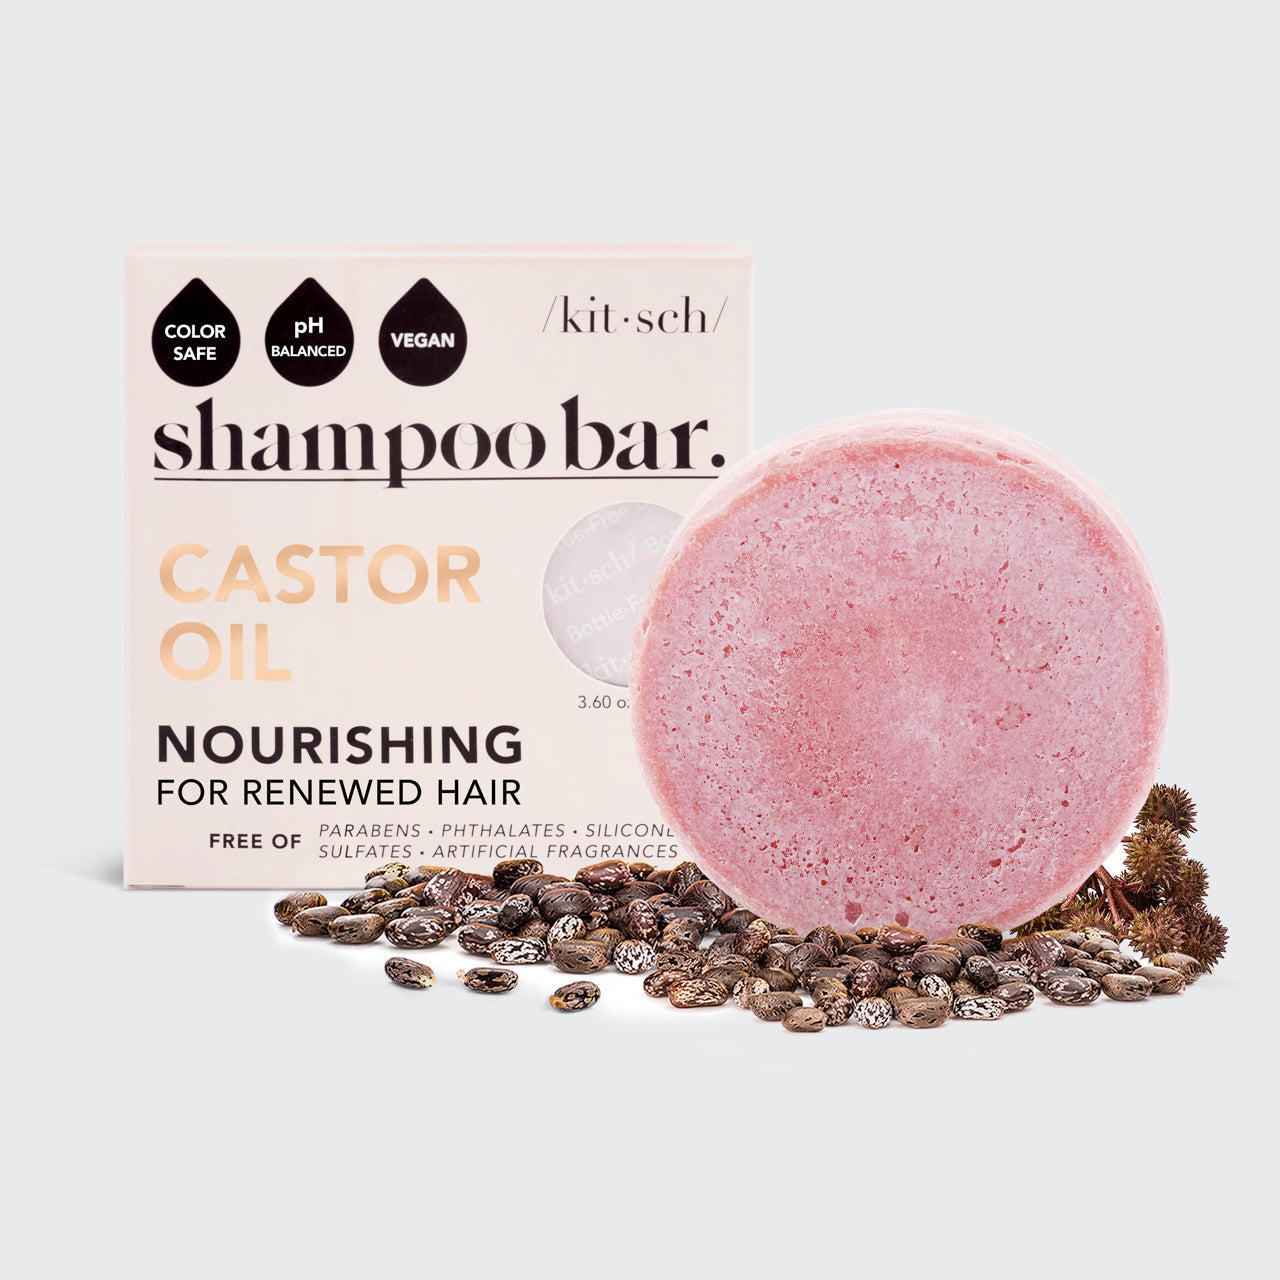  Castor Oil Nourishing Shampoo Bar by KITSCH KITSCH Perfumarie